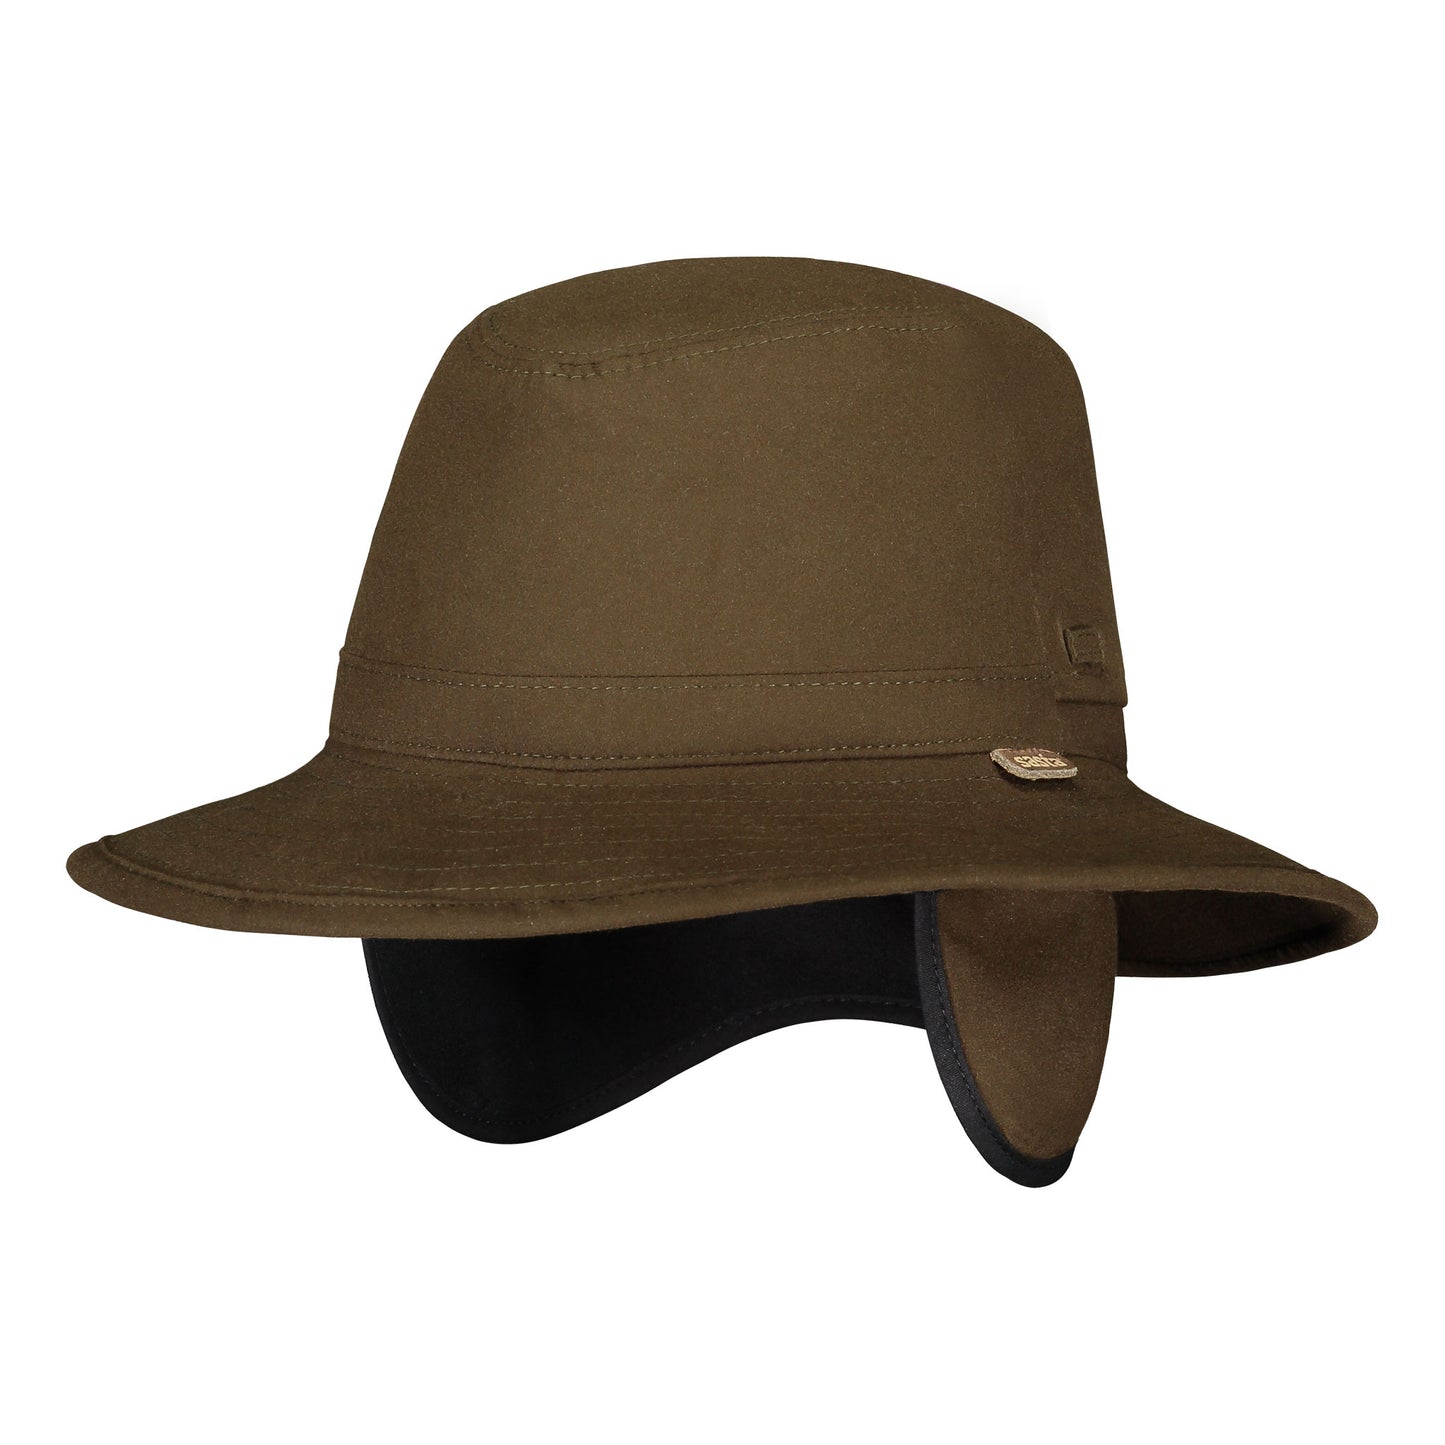 Montana hat